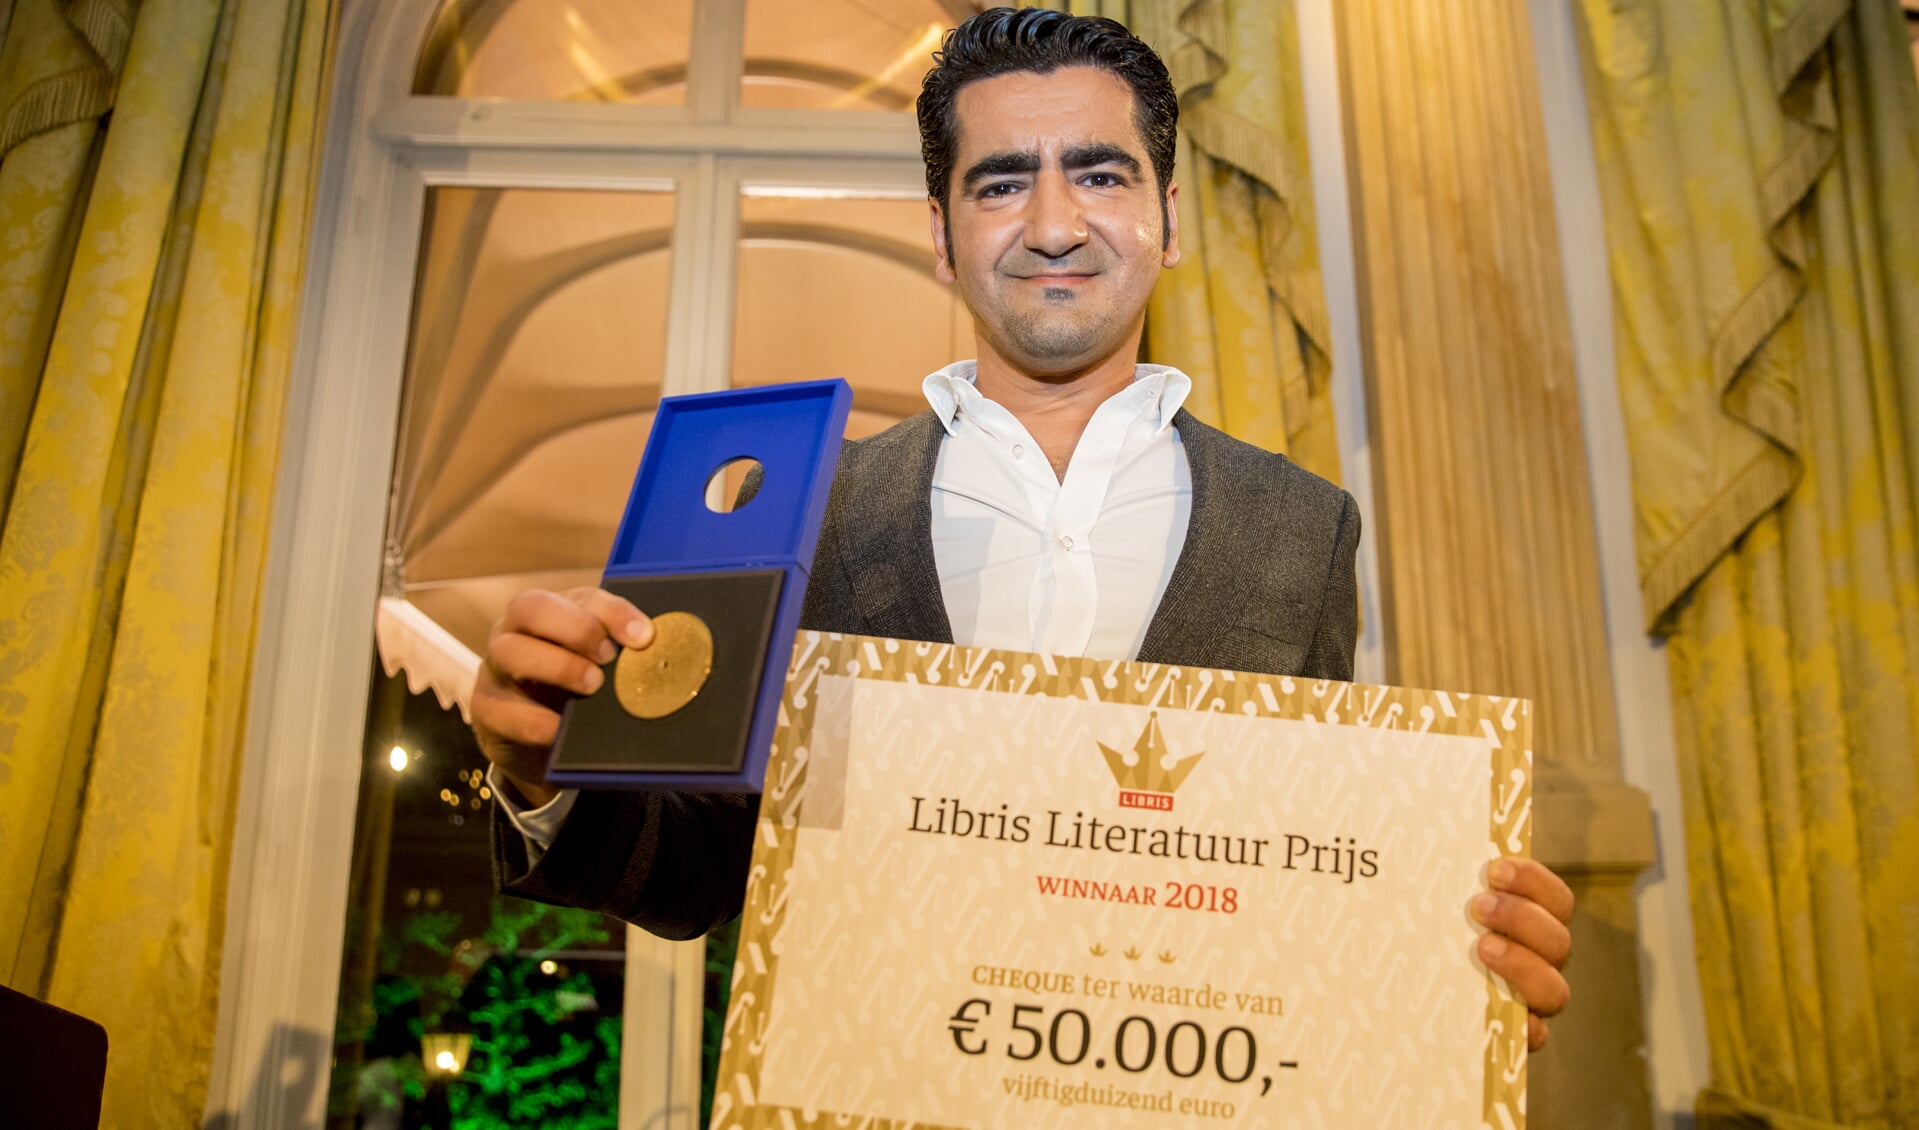 Feestelijke uitreiking Libris Literatuur Prijs 2018 